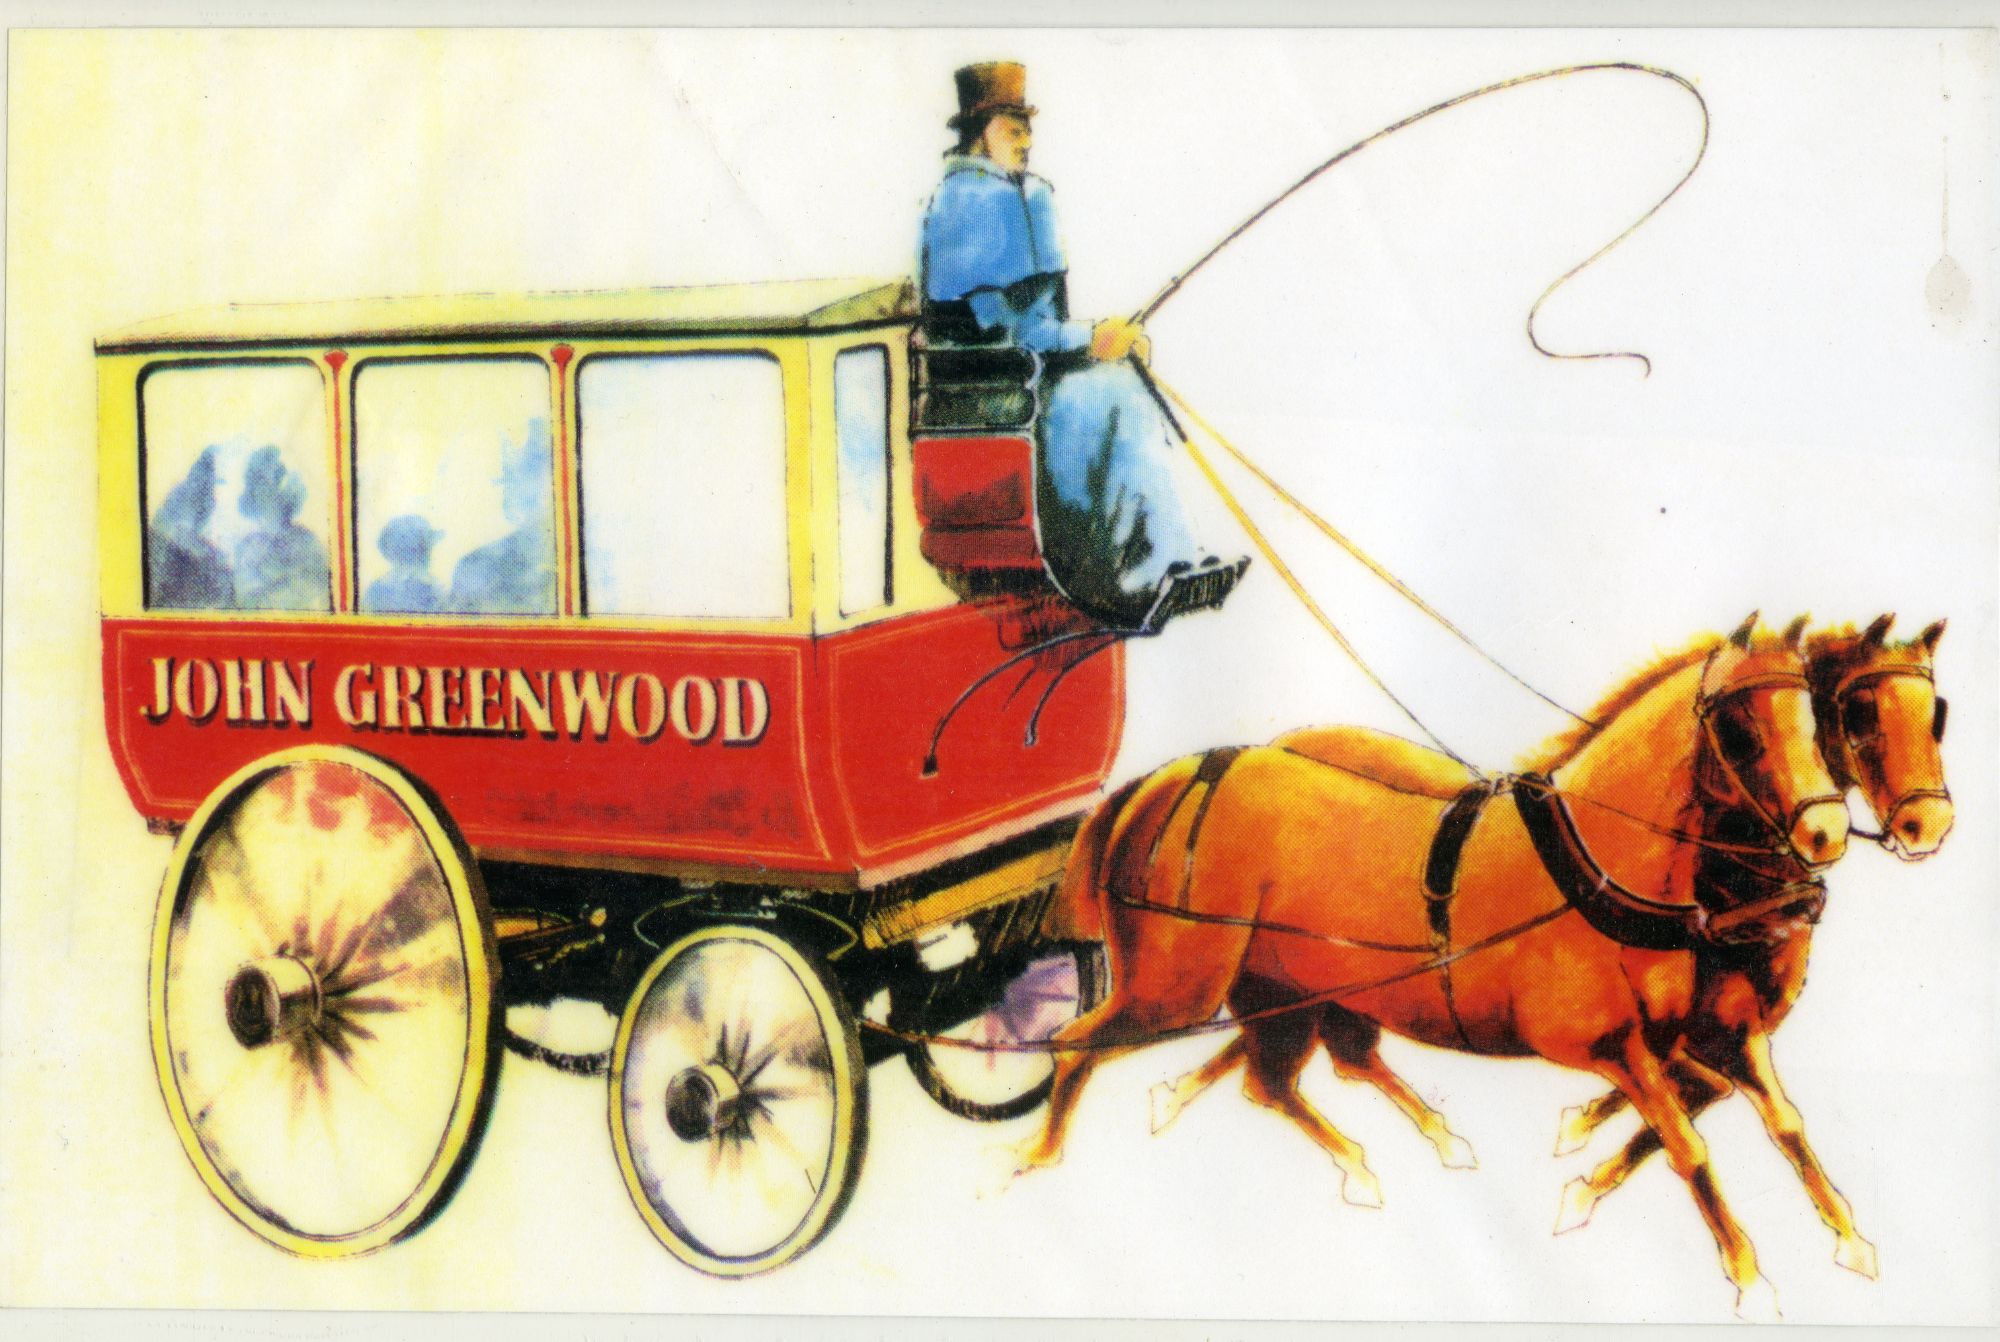 Drawing of John Greenwood's 1824 horse omnibus